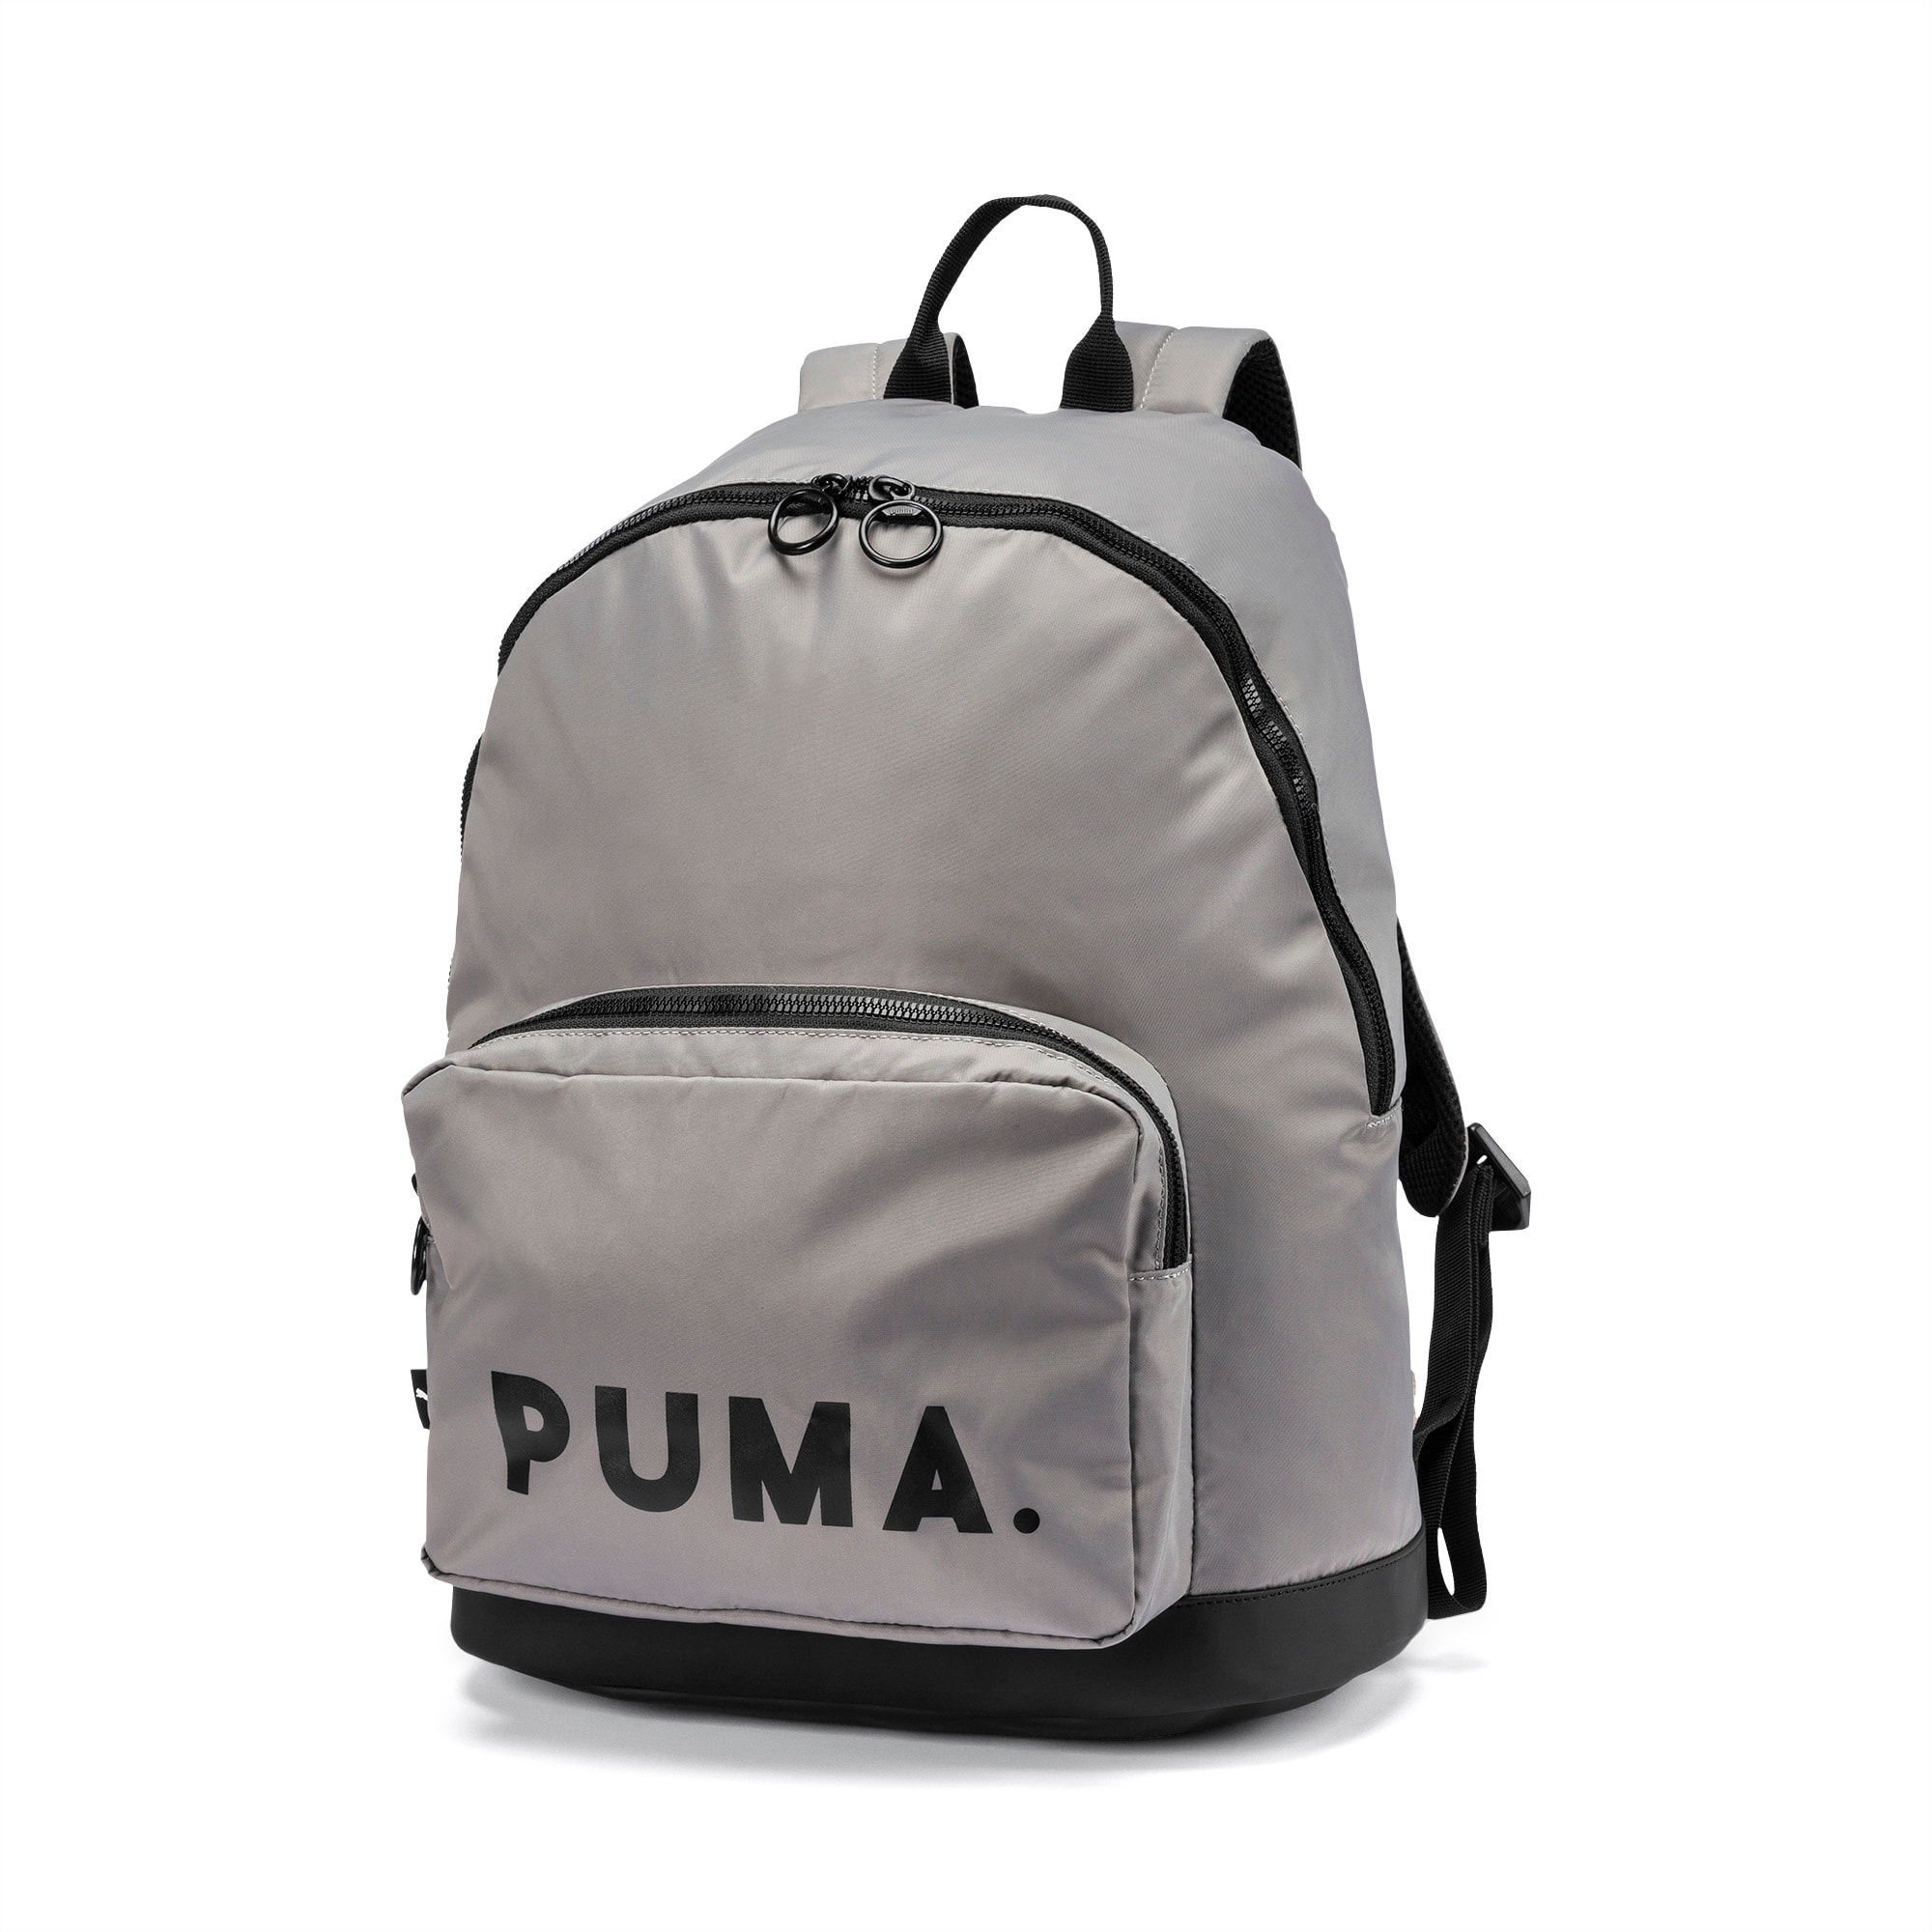 puma backpack original